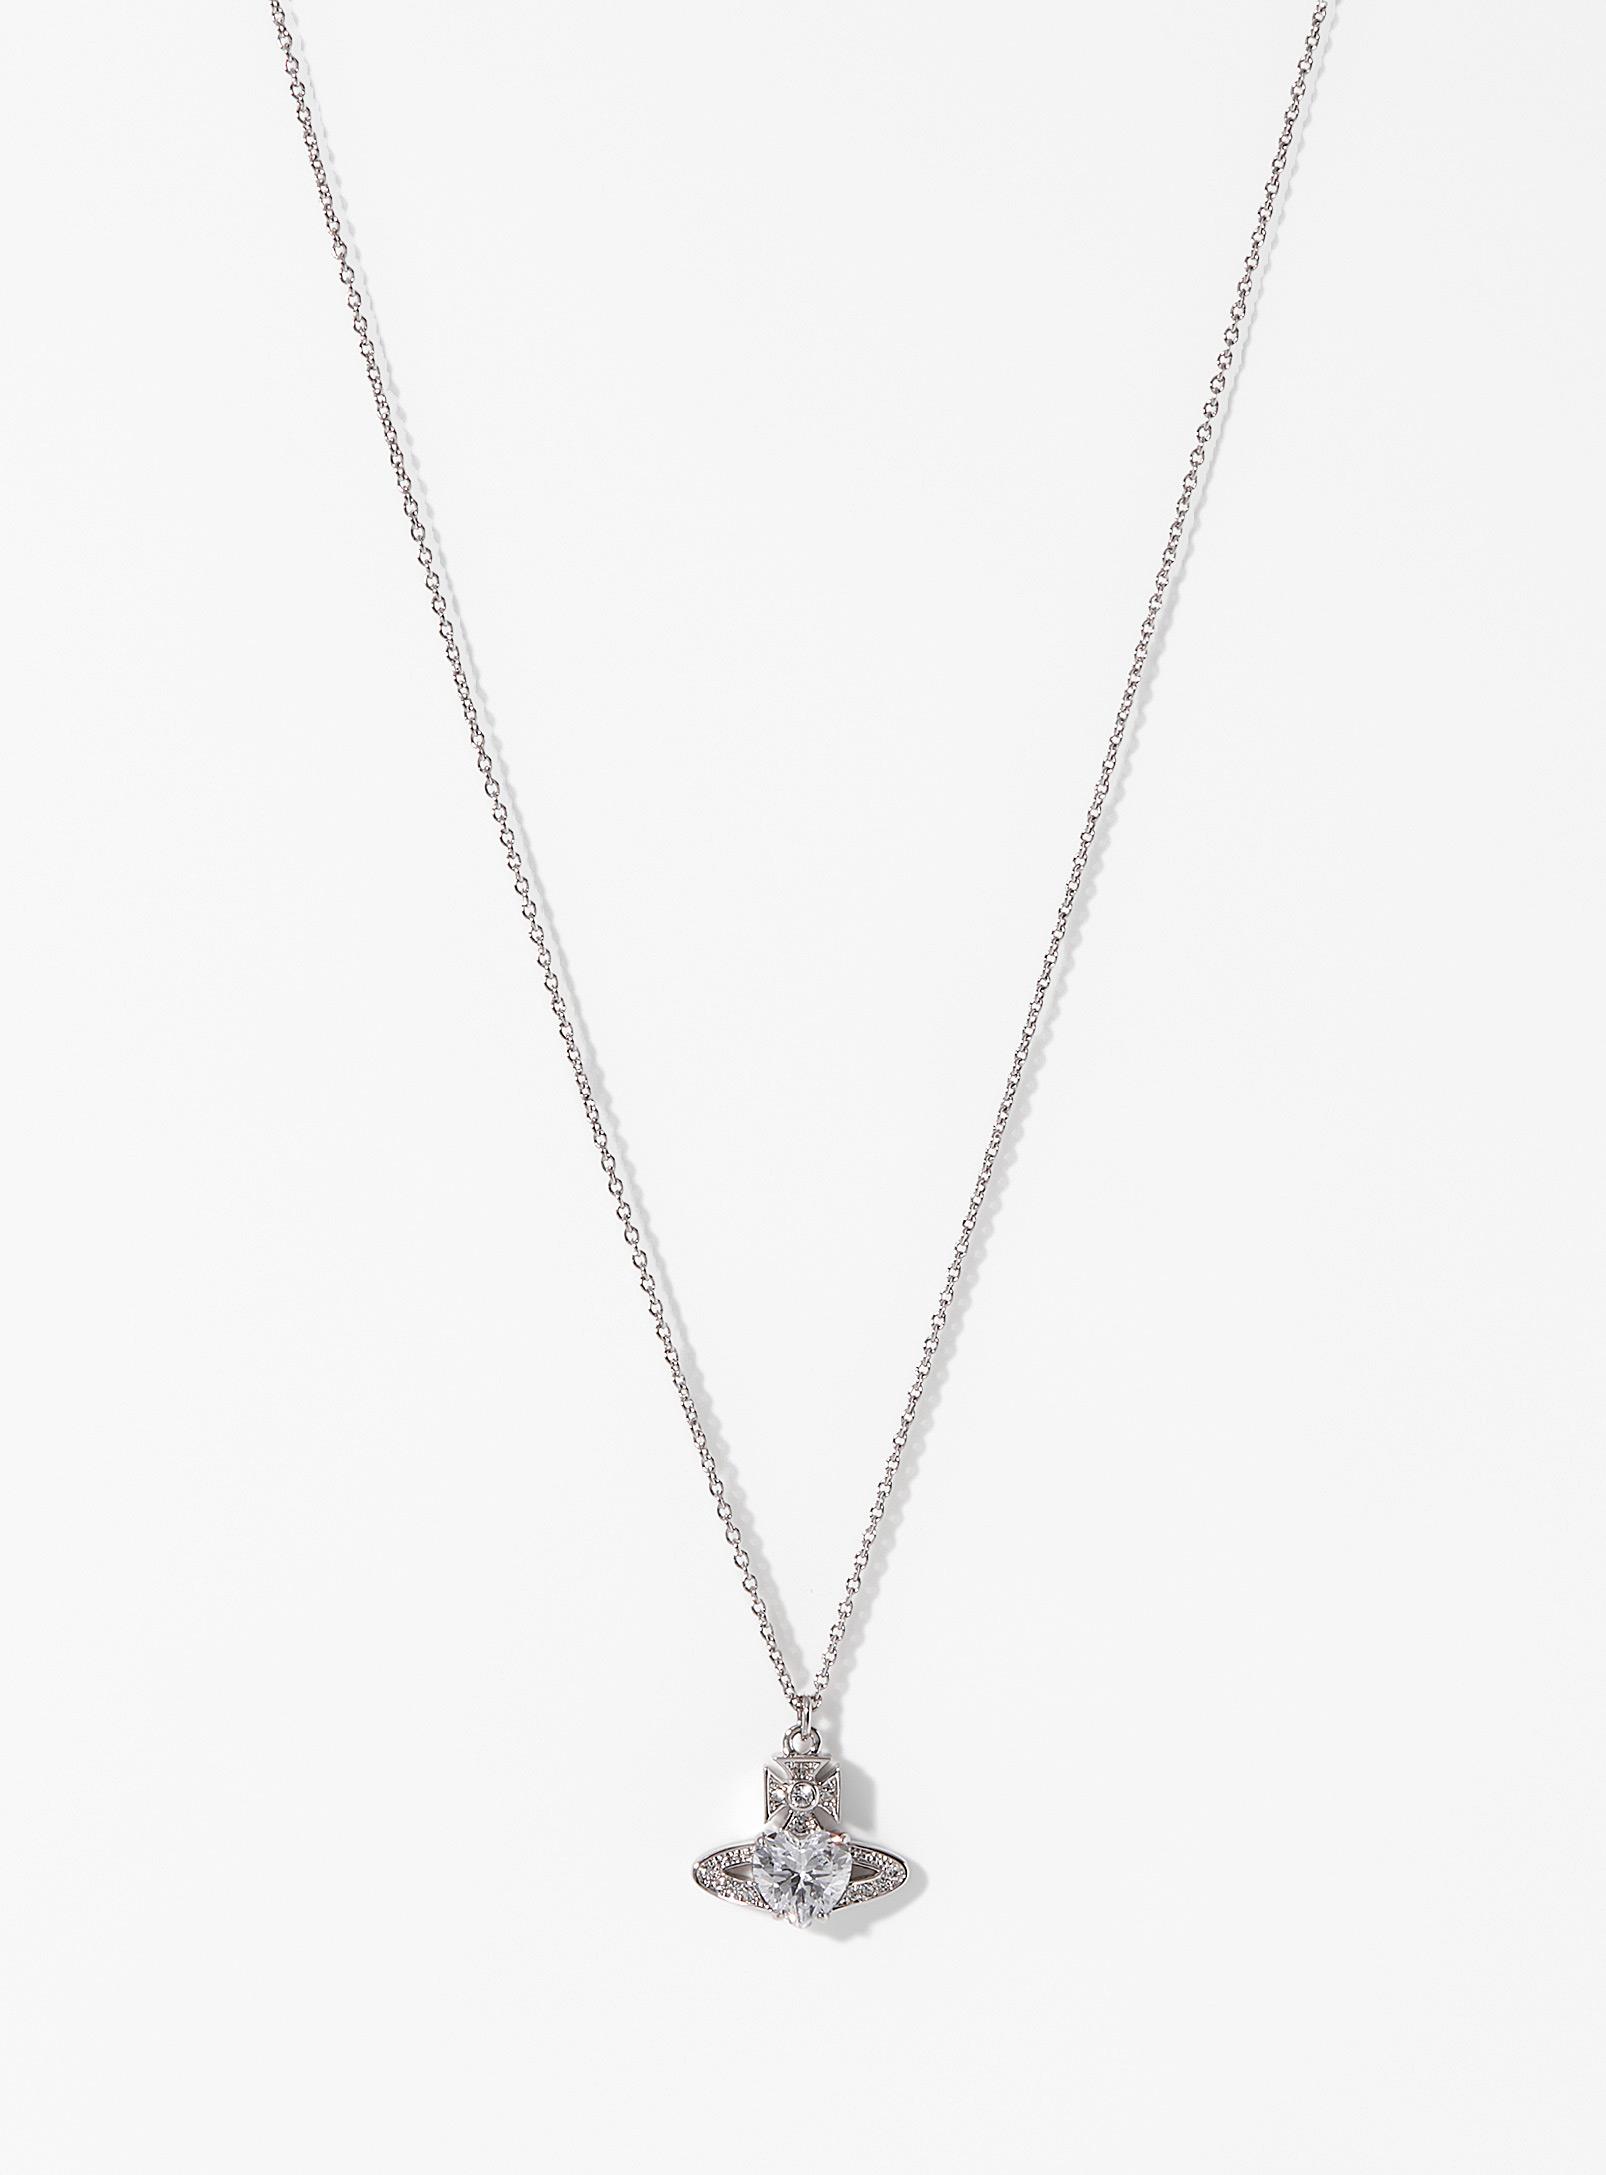 Vivienne Westwood Ariella Rose Gold Tone Pendant | 0119179 | Beaverbrooks  the Jewellers